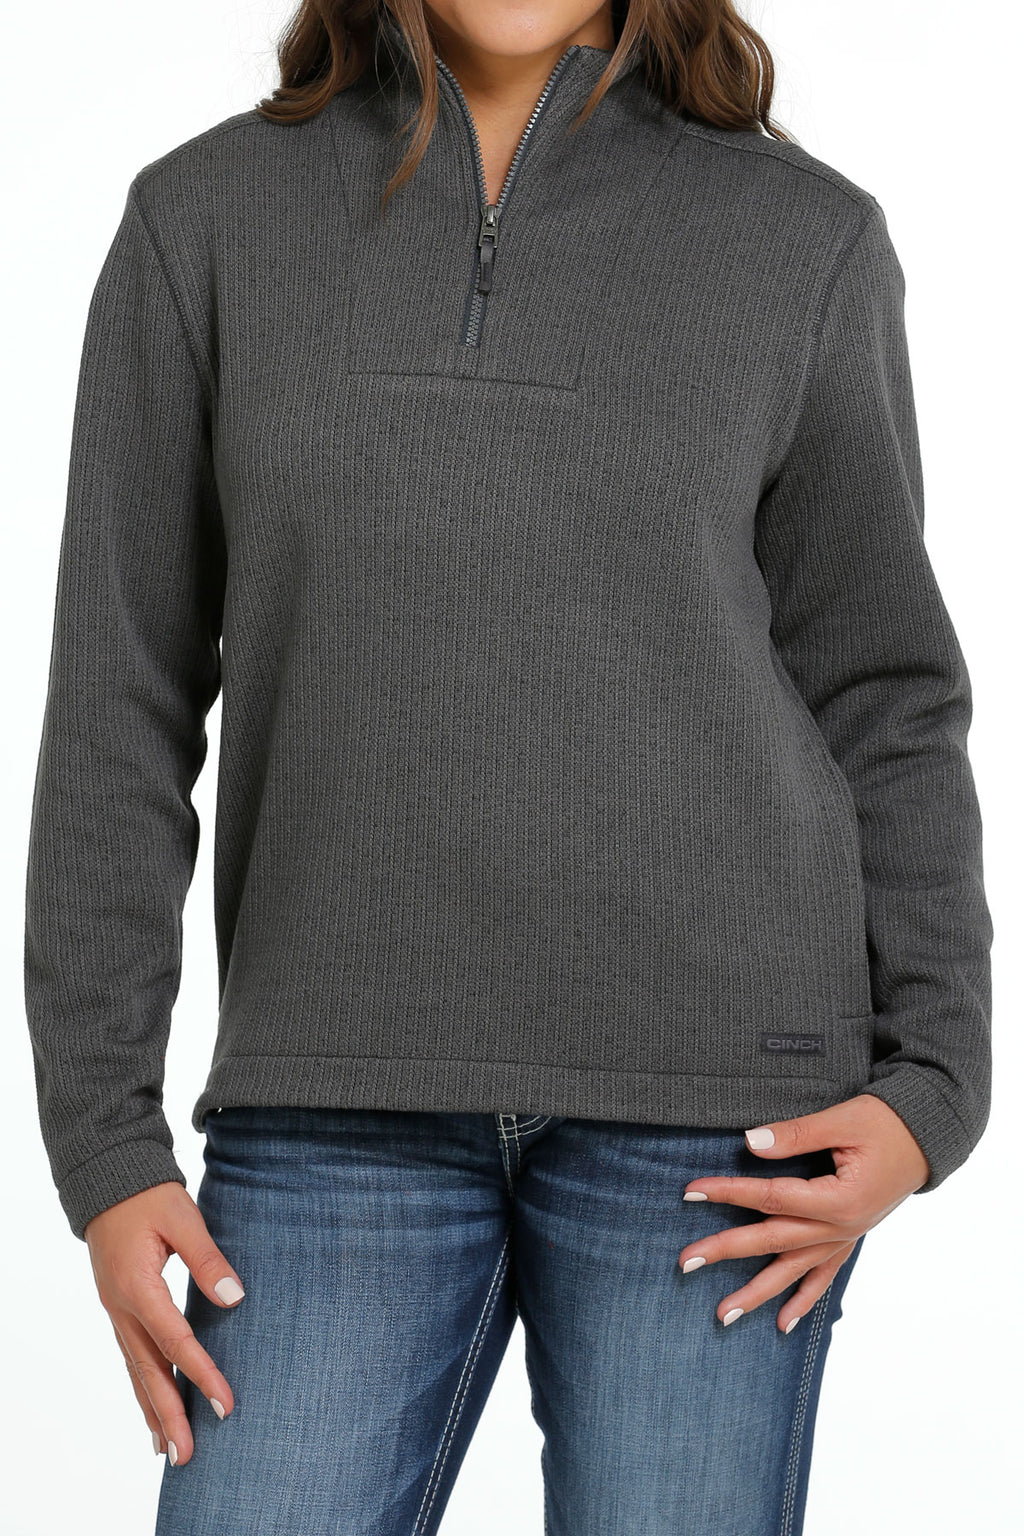 CINCH Women's Charcoal Quarter Zip Knit Sweater